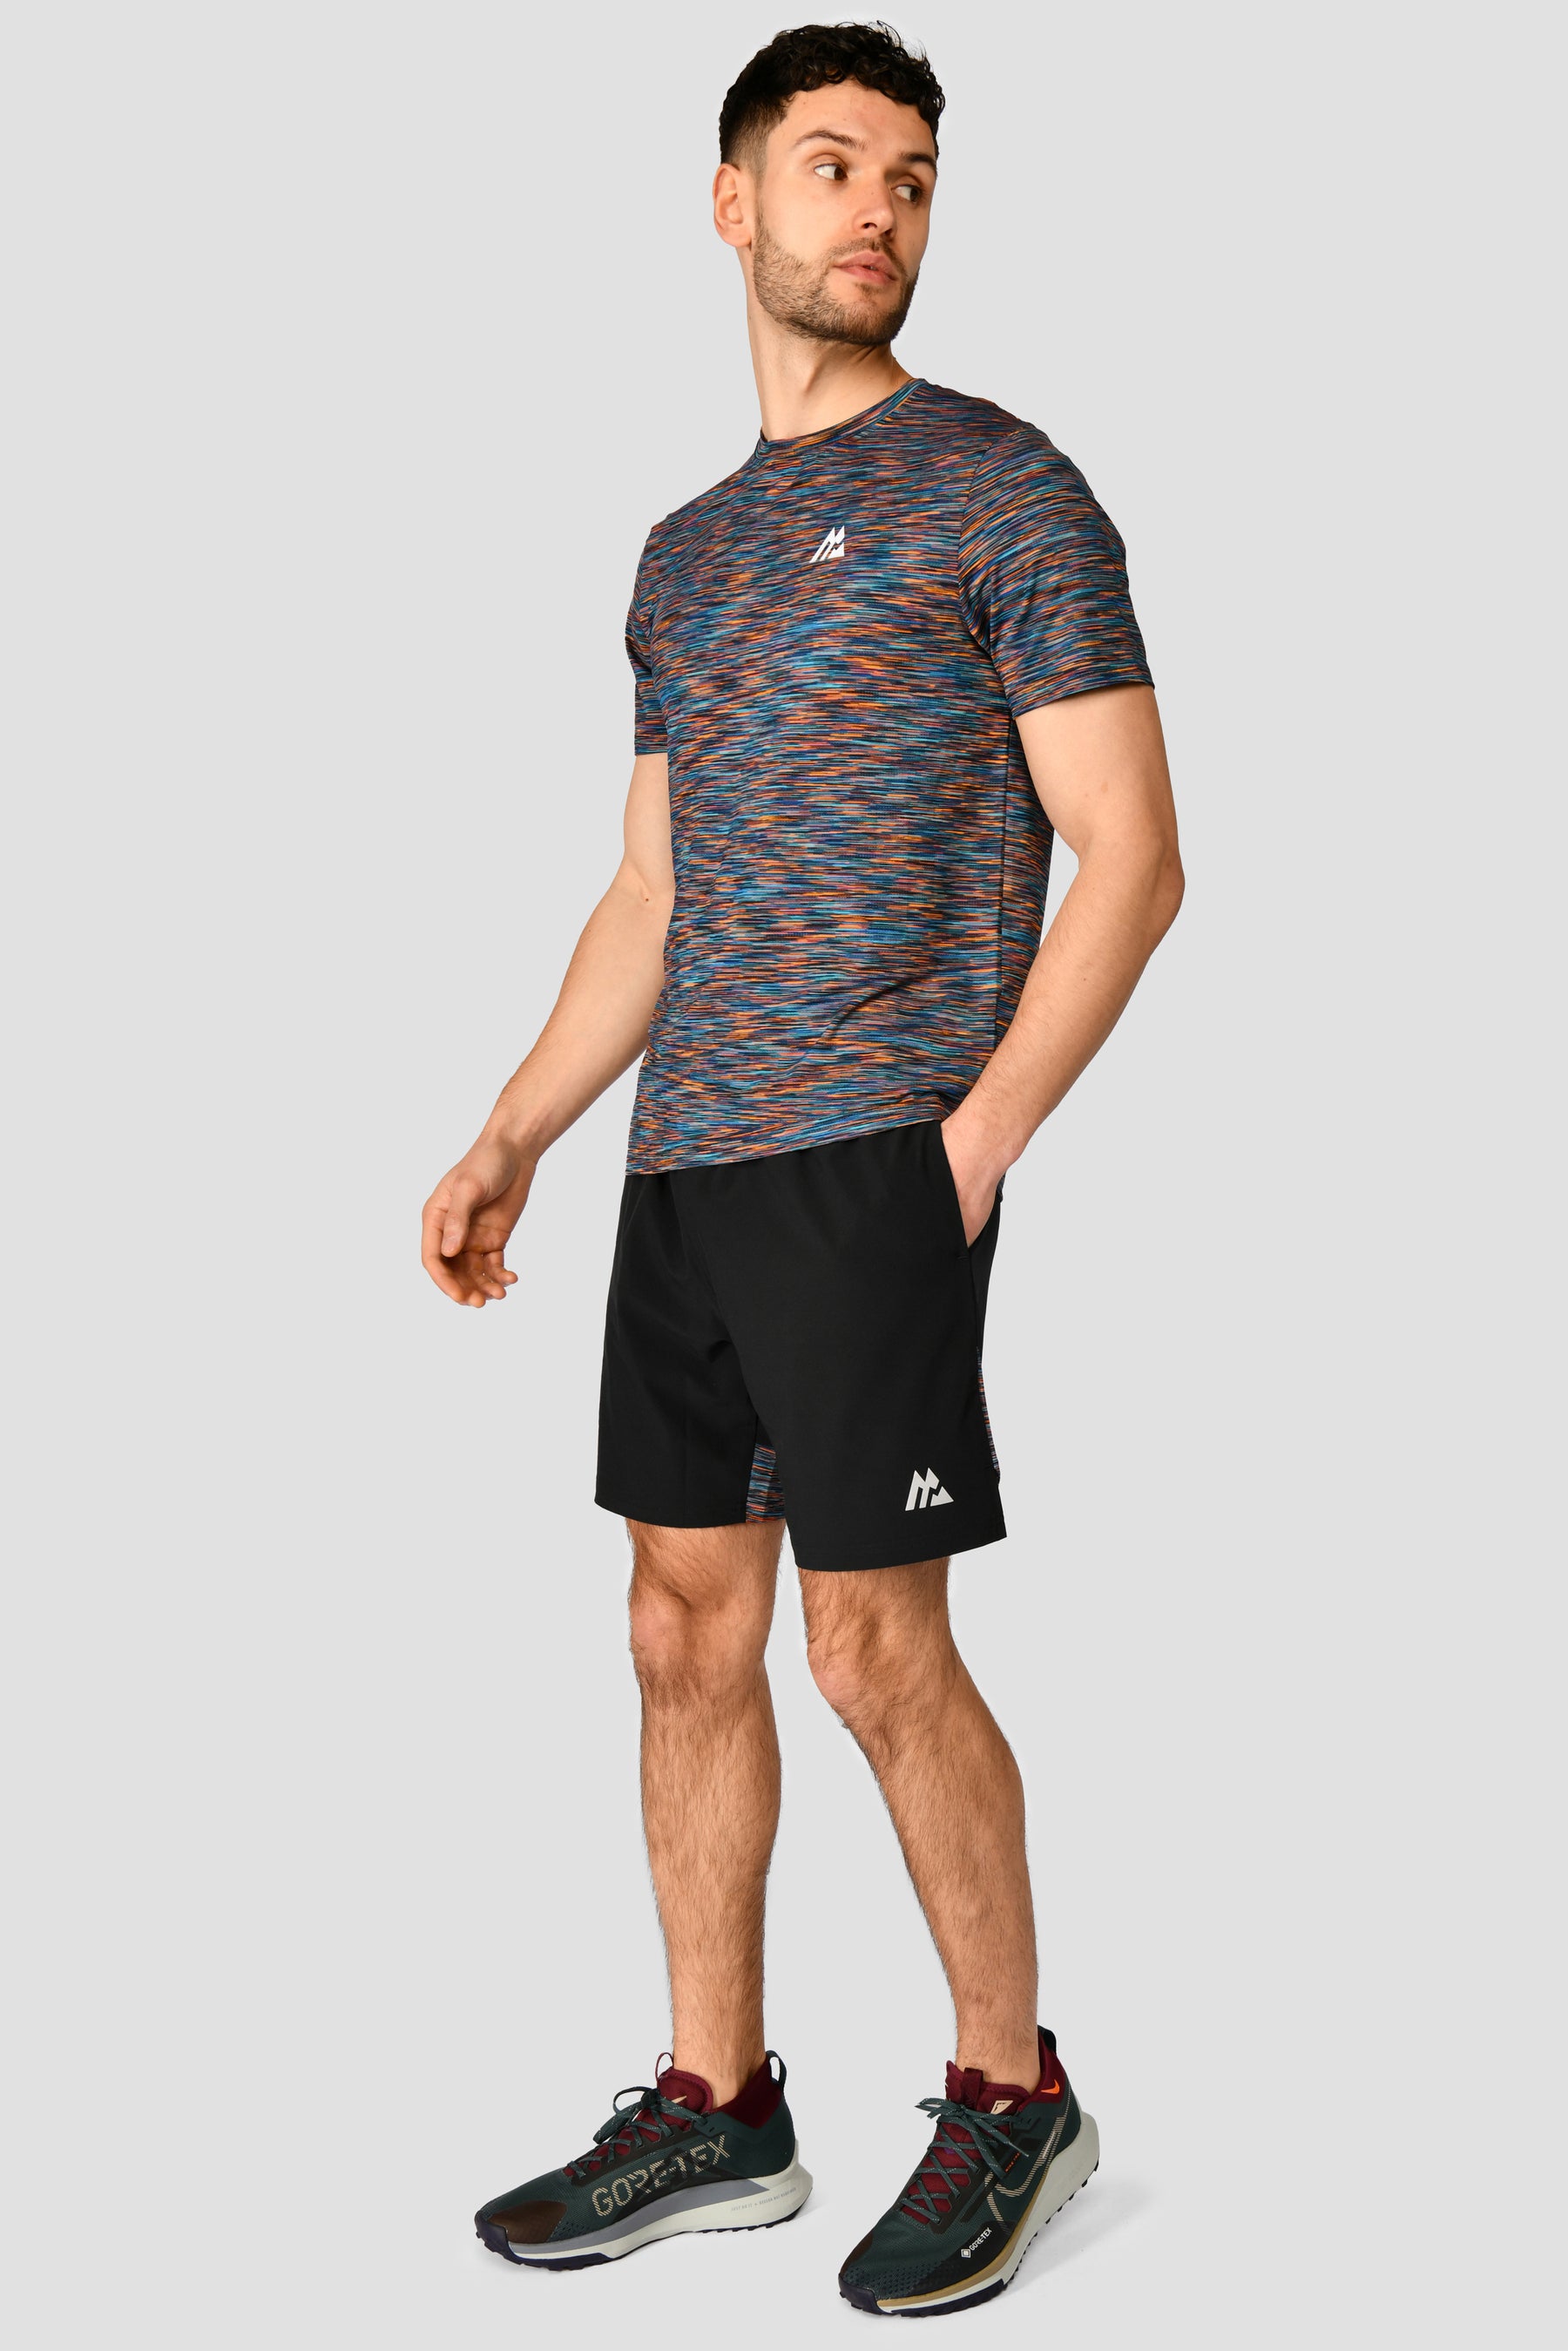 Men's  Trail 2.0 T-Shirt - Black/Blue/Neon Orange